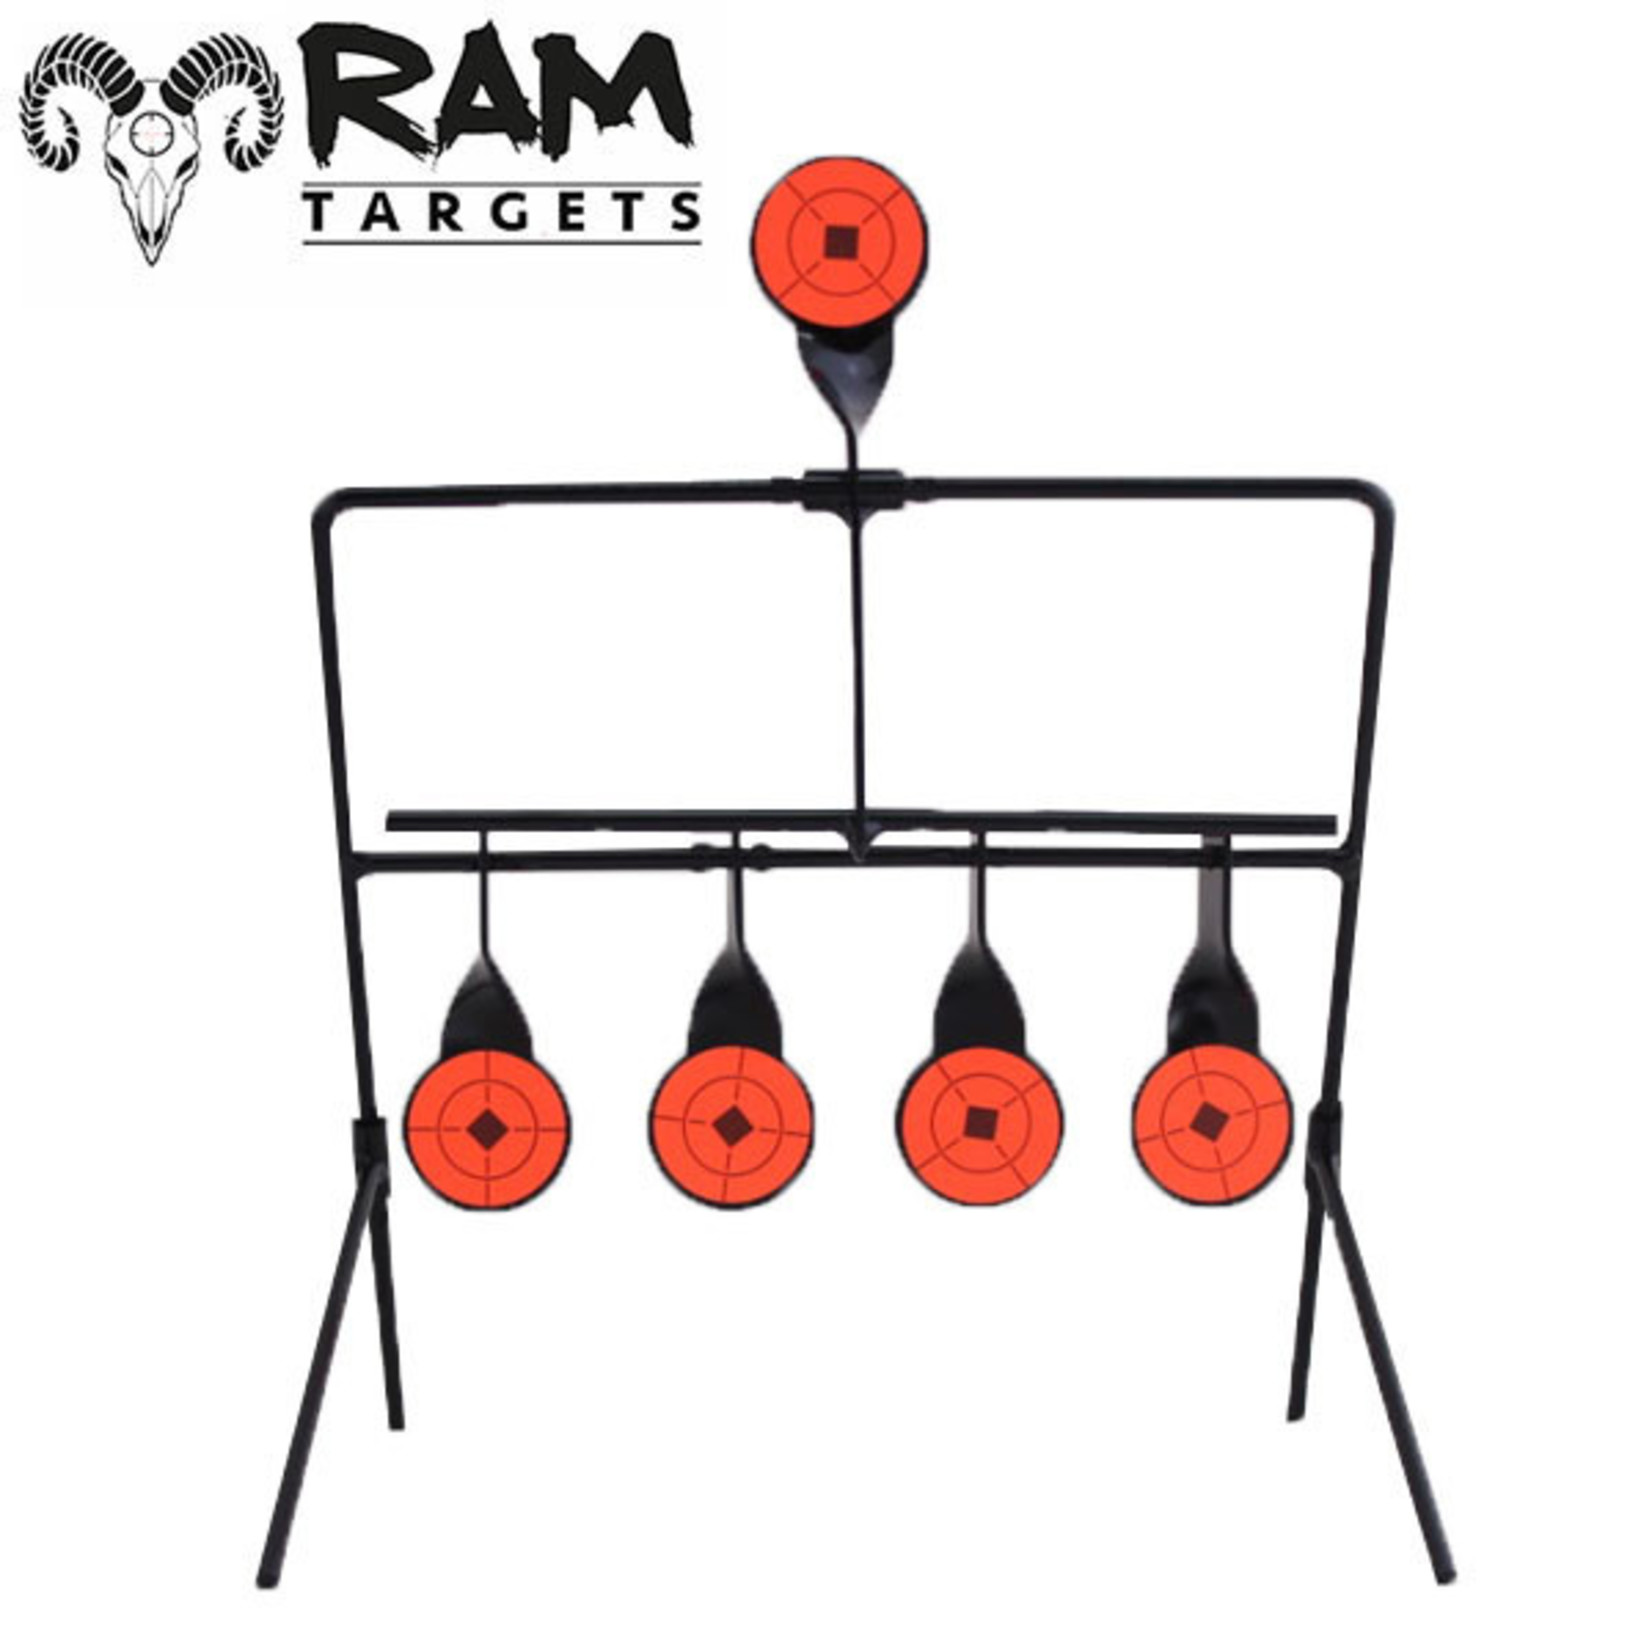 Ram Targets RAM SPINNER TARGET 5 PLATES